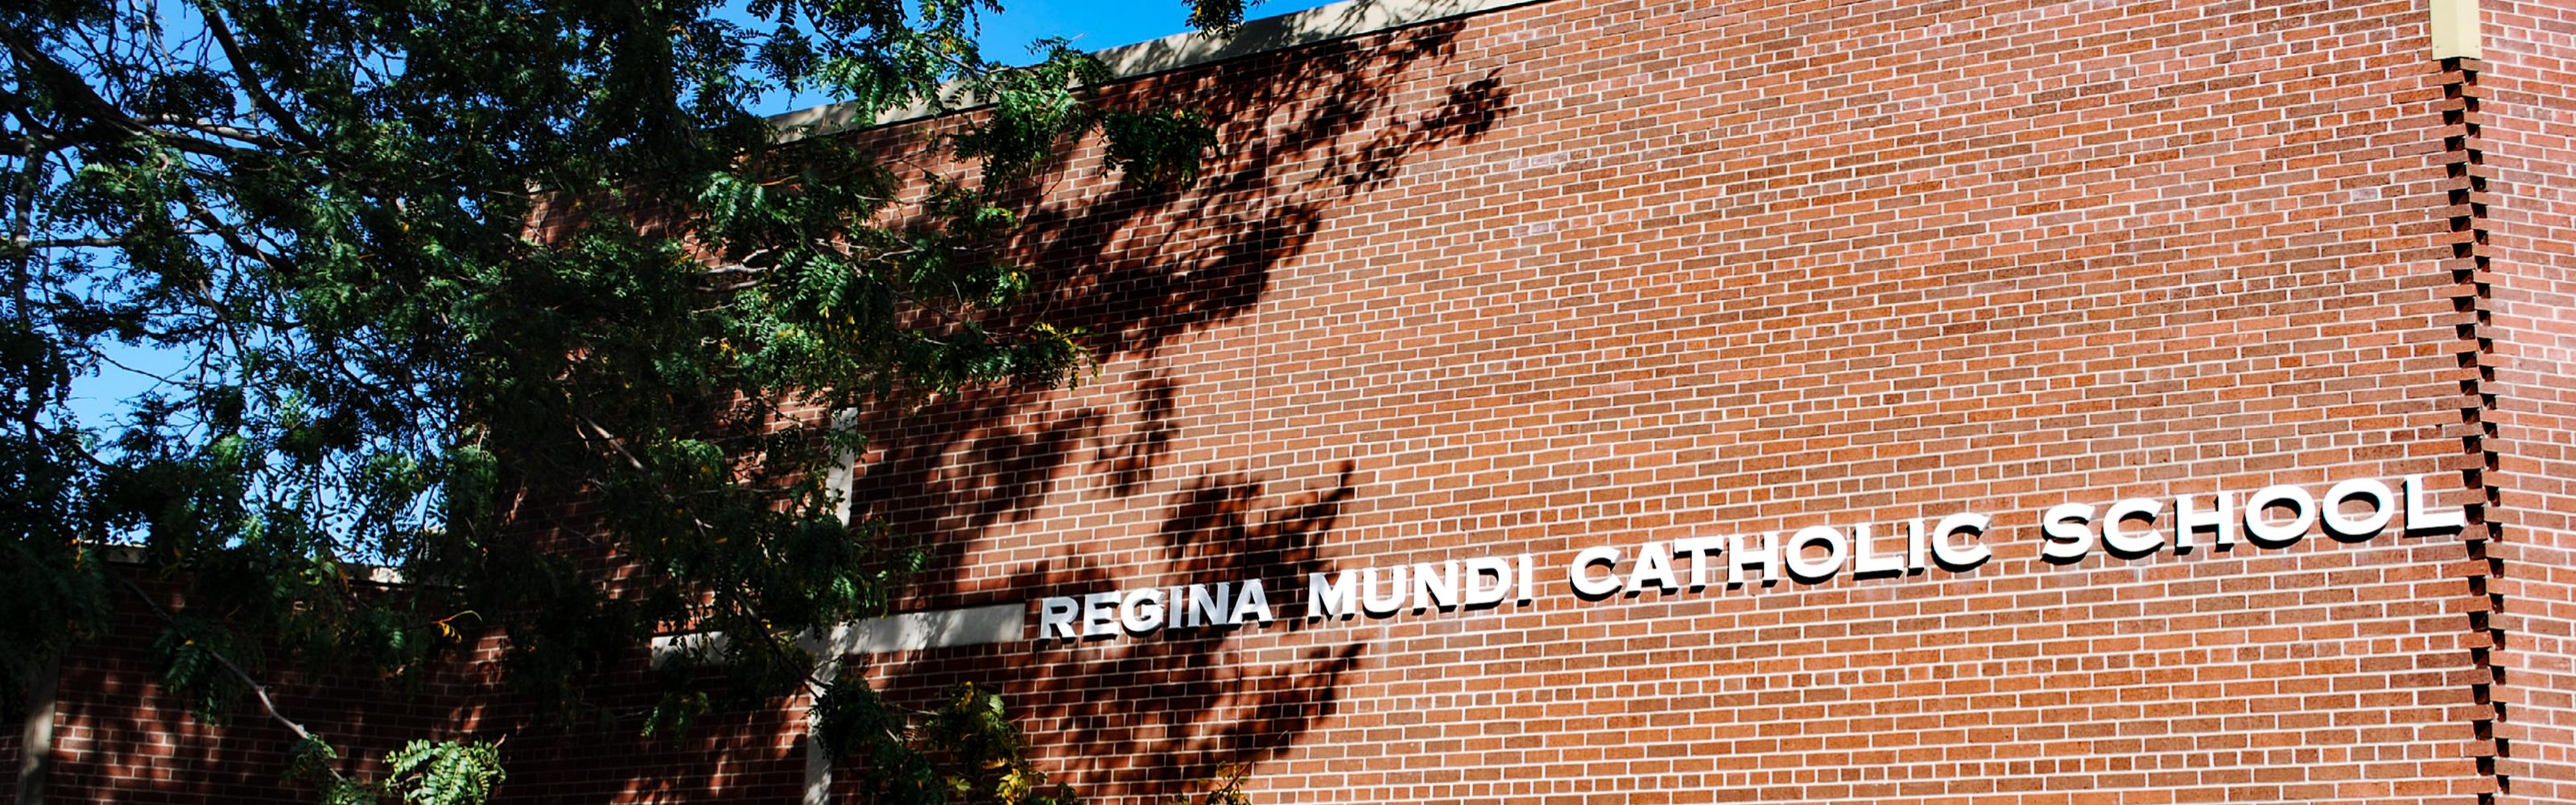 The front of the Regina Mundi Catholic School building.